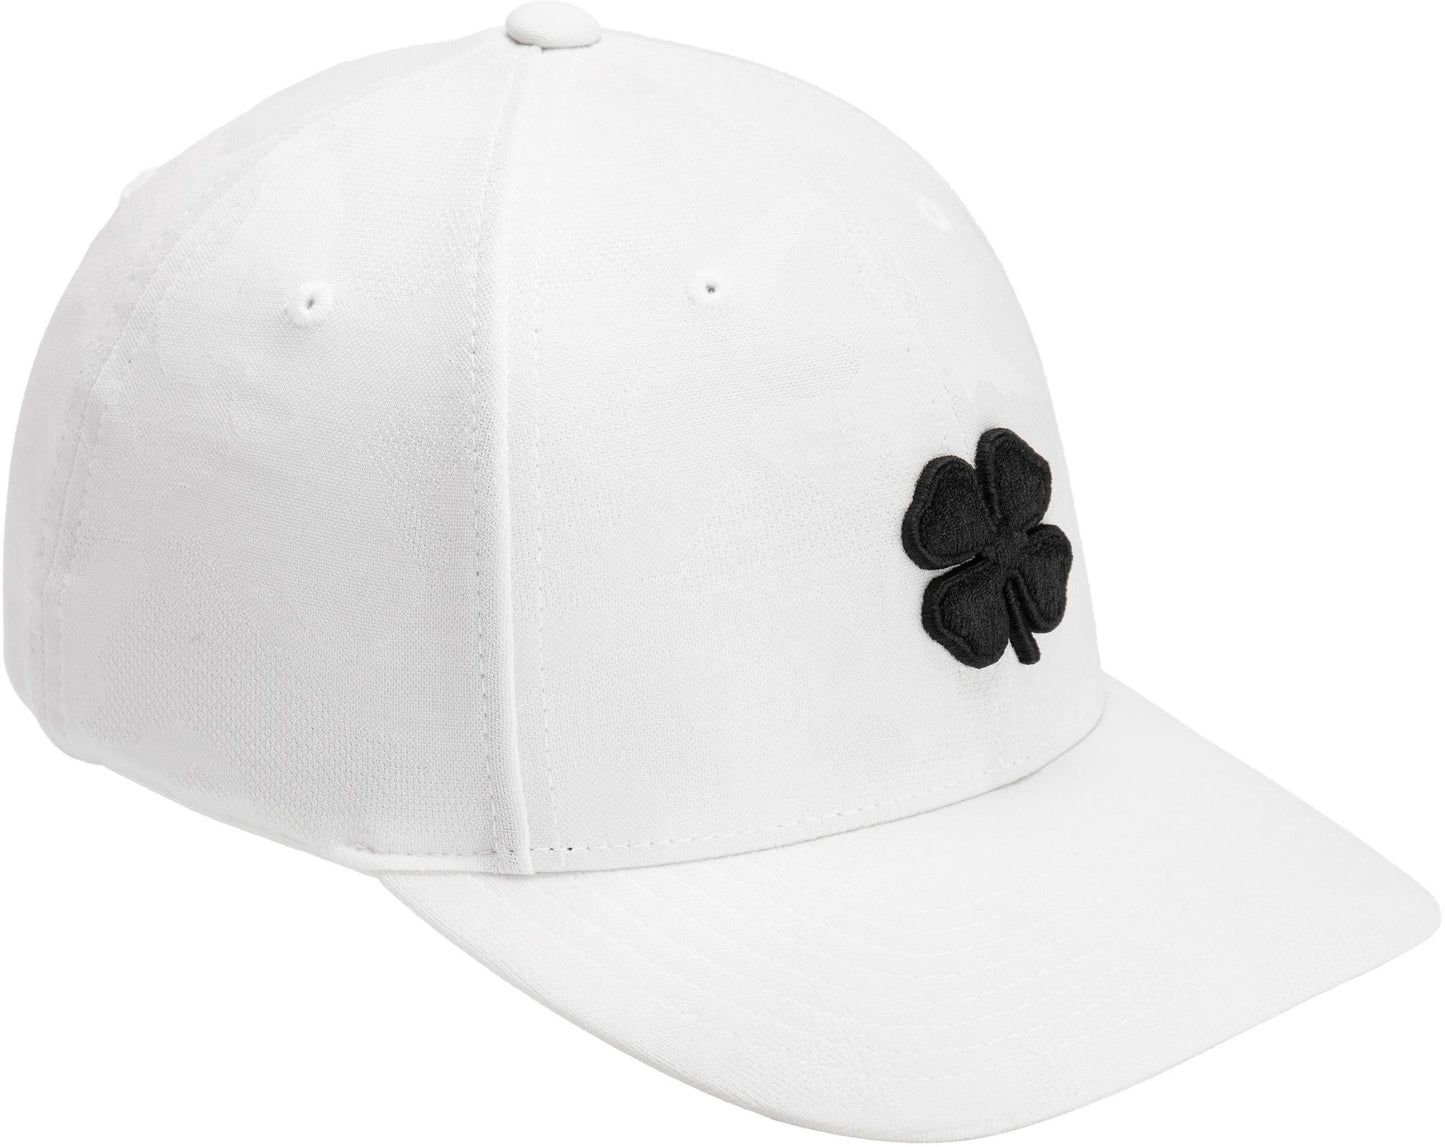 Black Clover Men's Fresh Start #3 Fitted Hat (On-Sale)